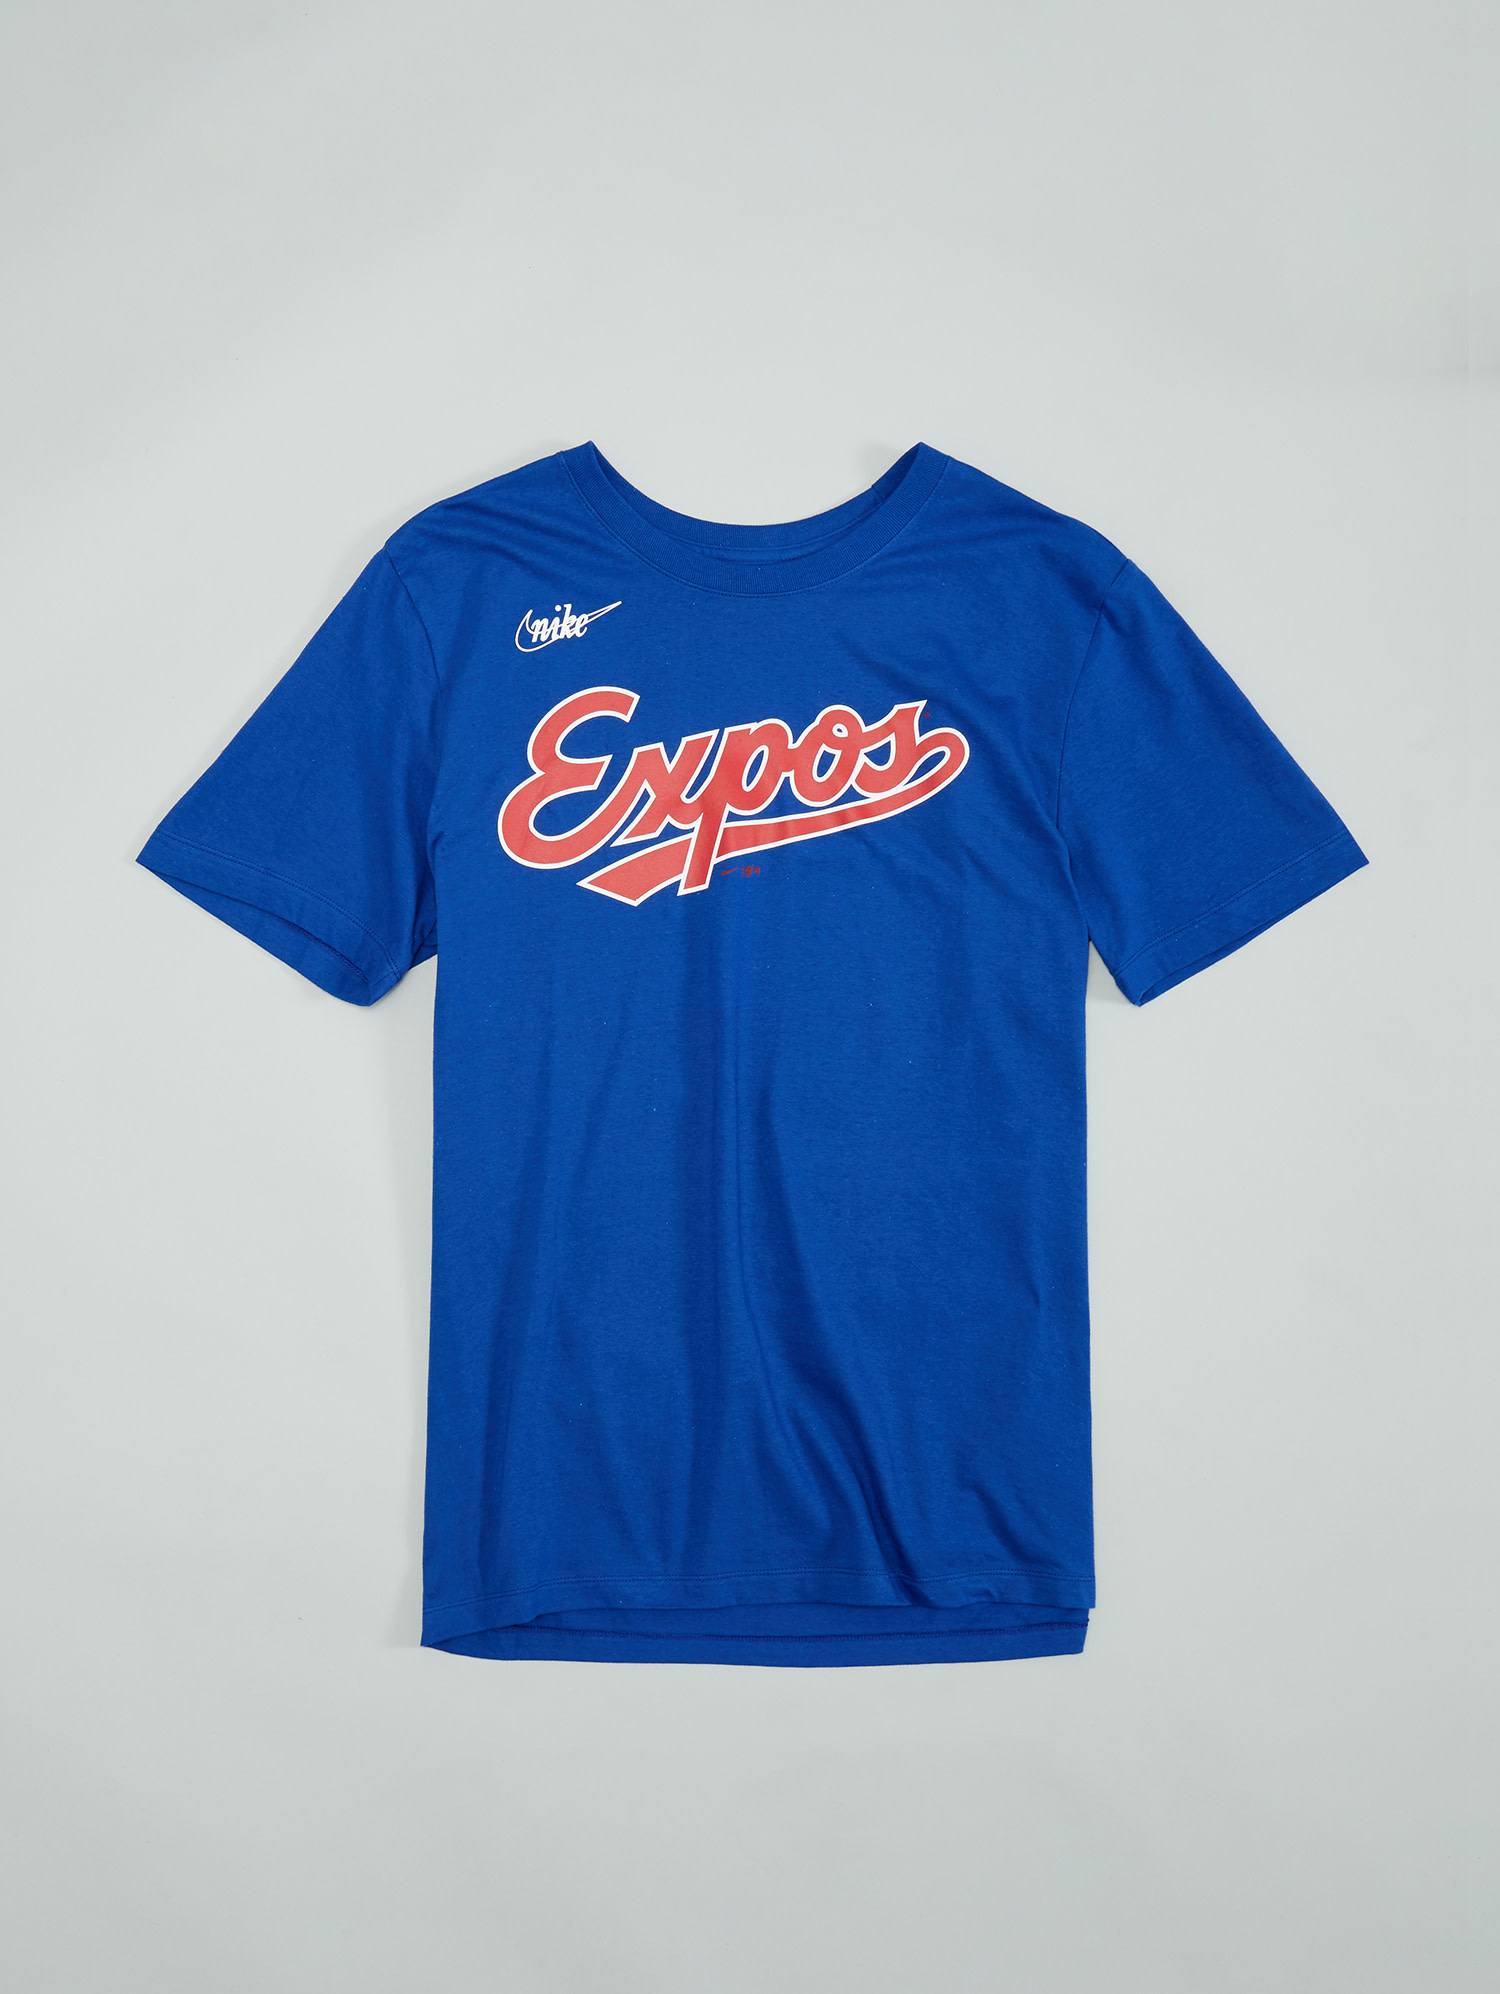 Tim Raines Expos Player T-Shirt